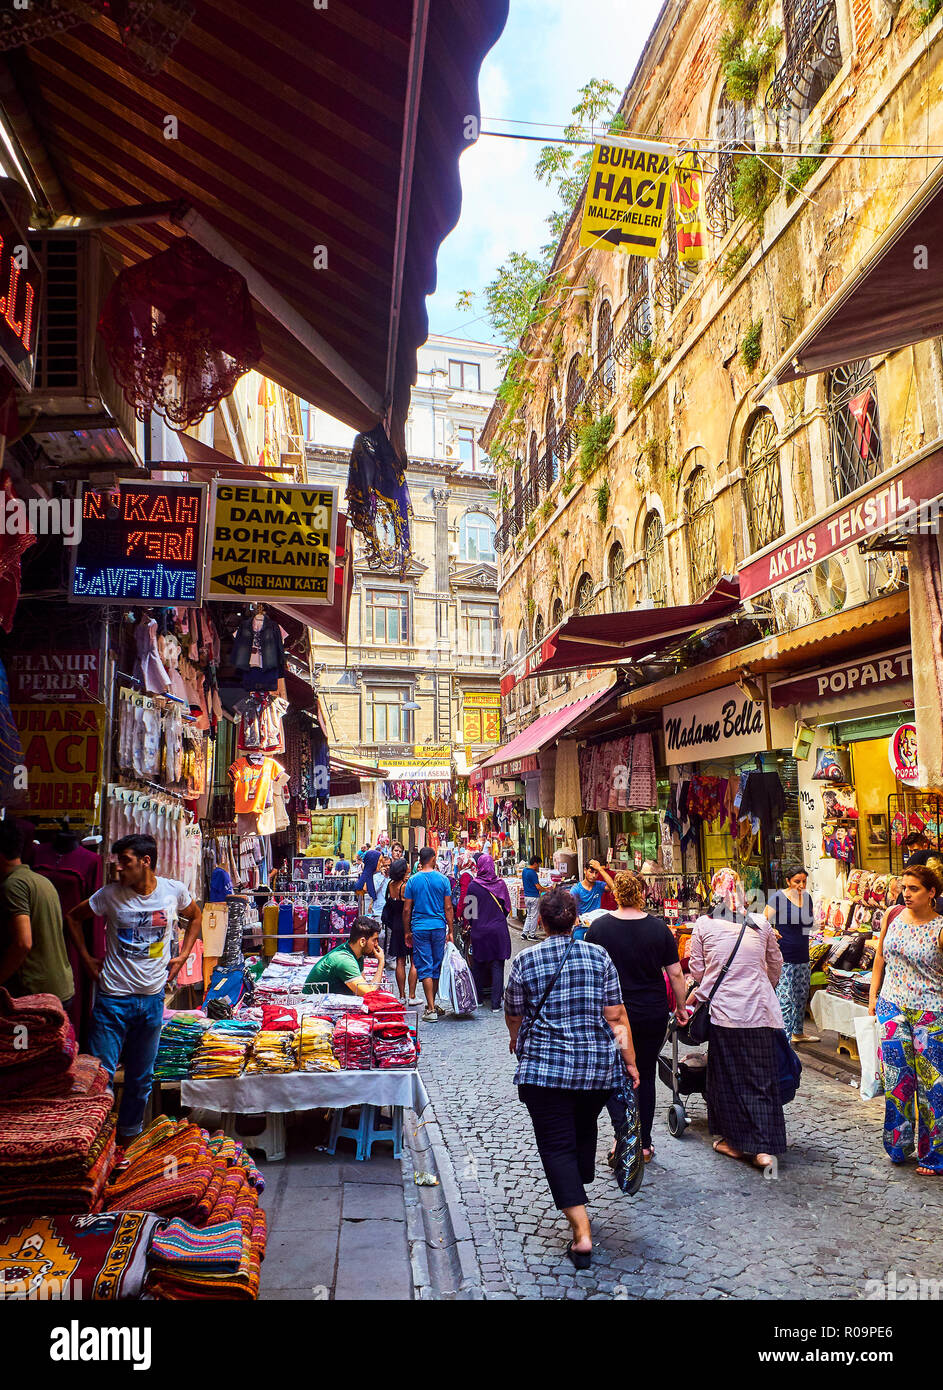 Citizens walking in Fincancilar street, a typical comercial street of Eminonu neighborhood, Fatih district. Istanbul Stock Photo